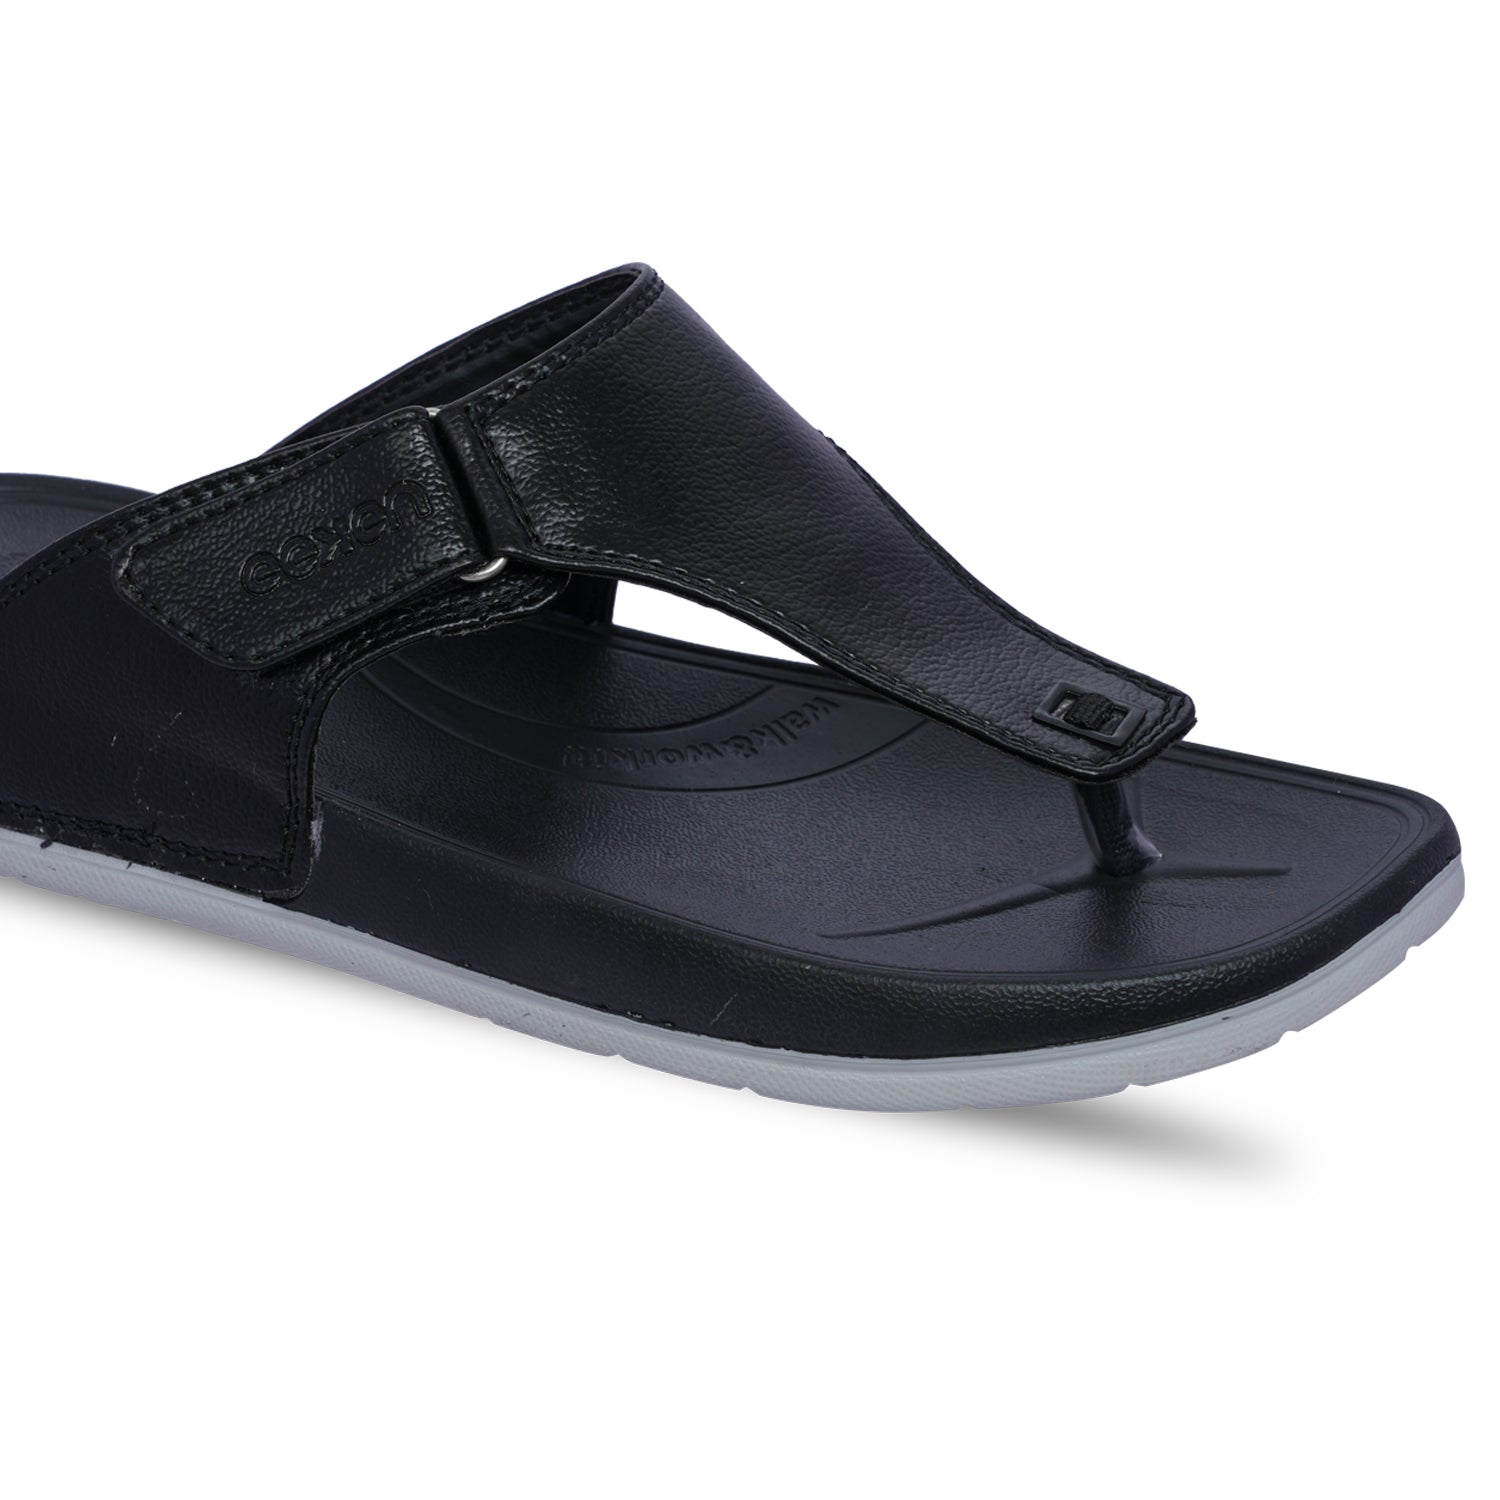 Eeken Stylish, Lightweight Dailywear Dual Density Casual Sandals For Men